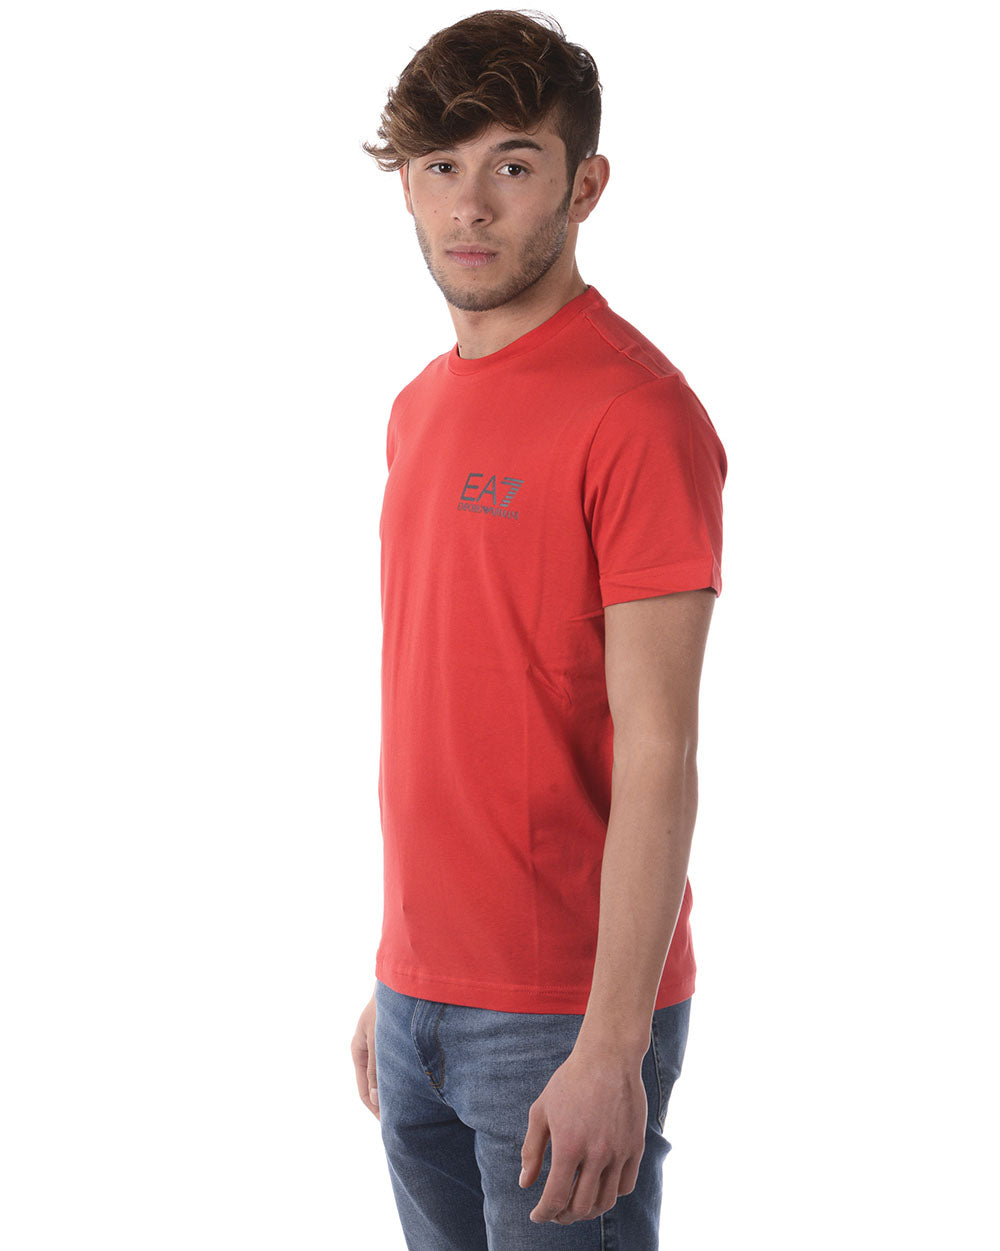 T-shirt Emporio Armani EA7 Rossa Casual Chic - mem39